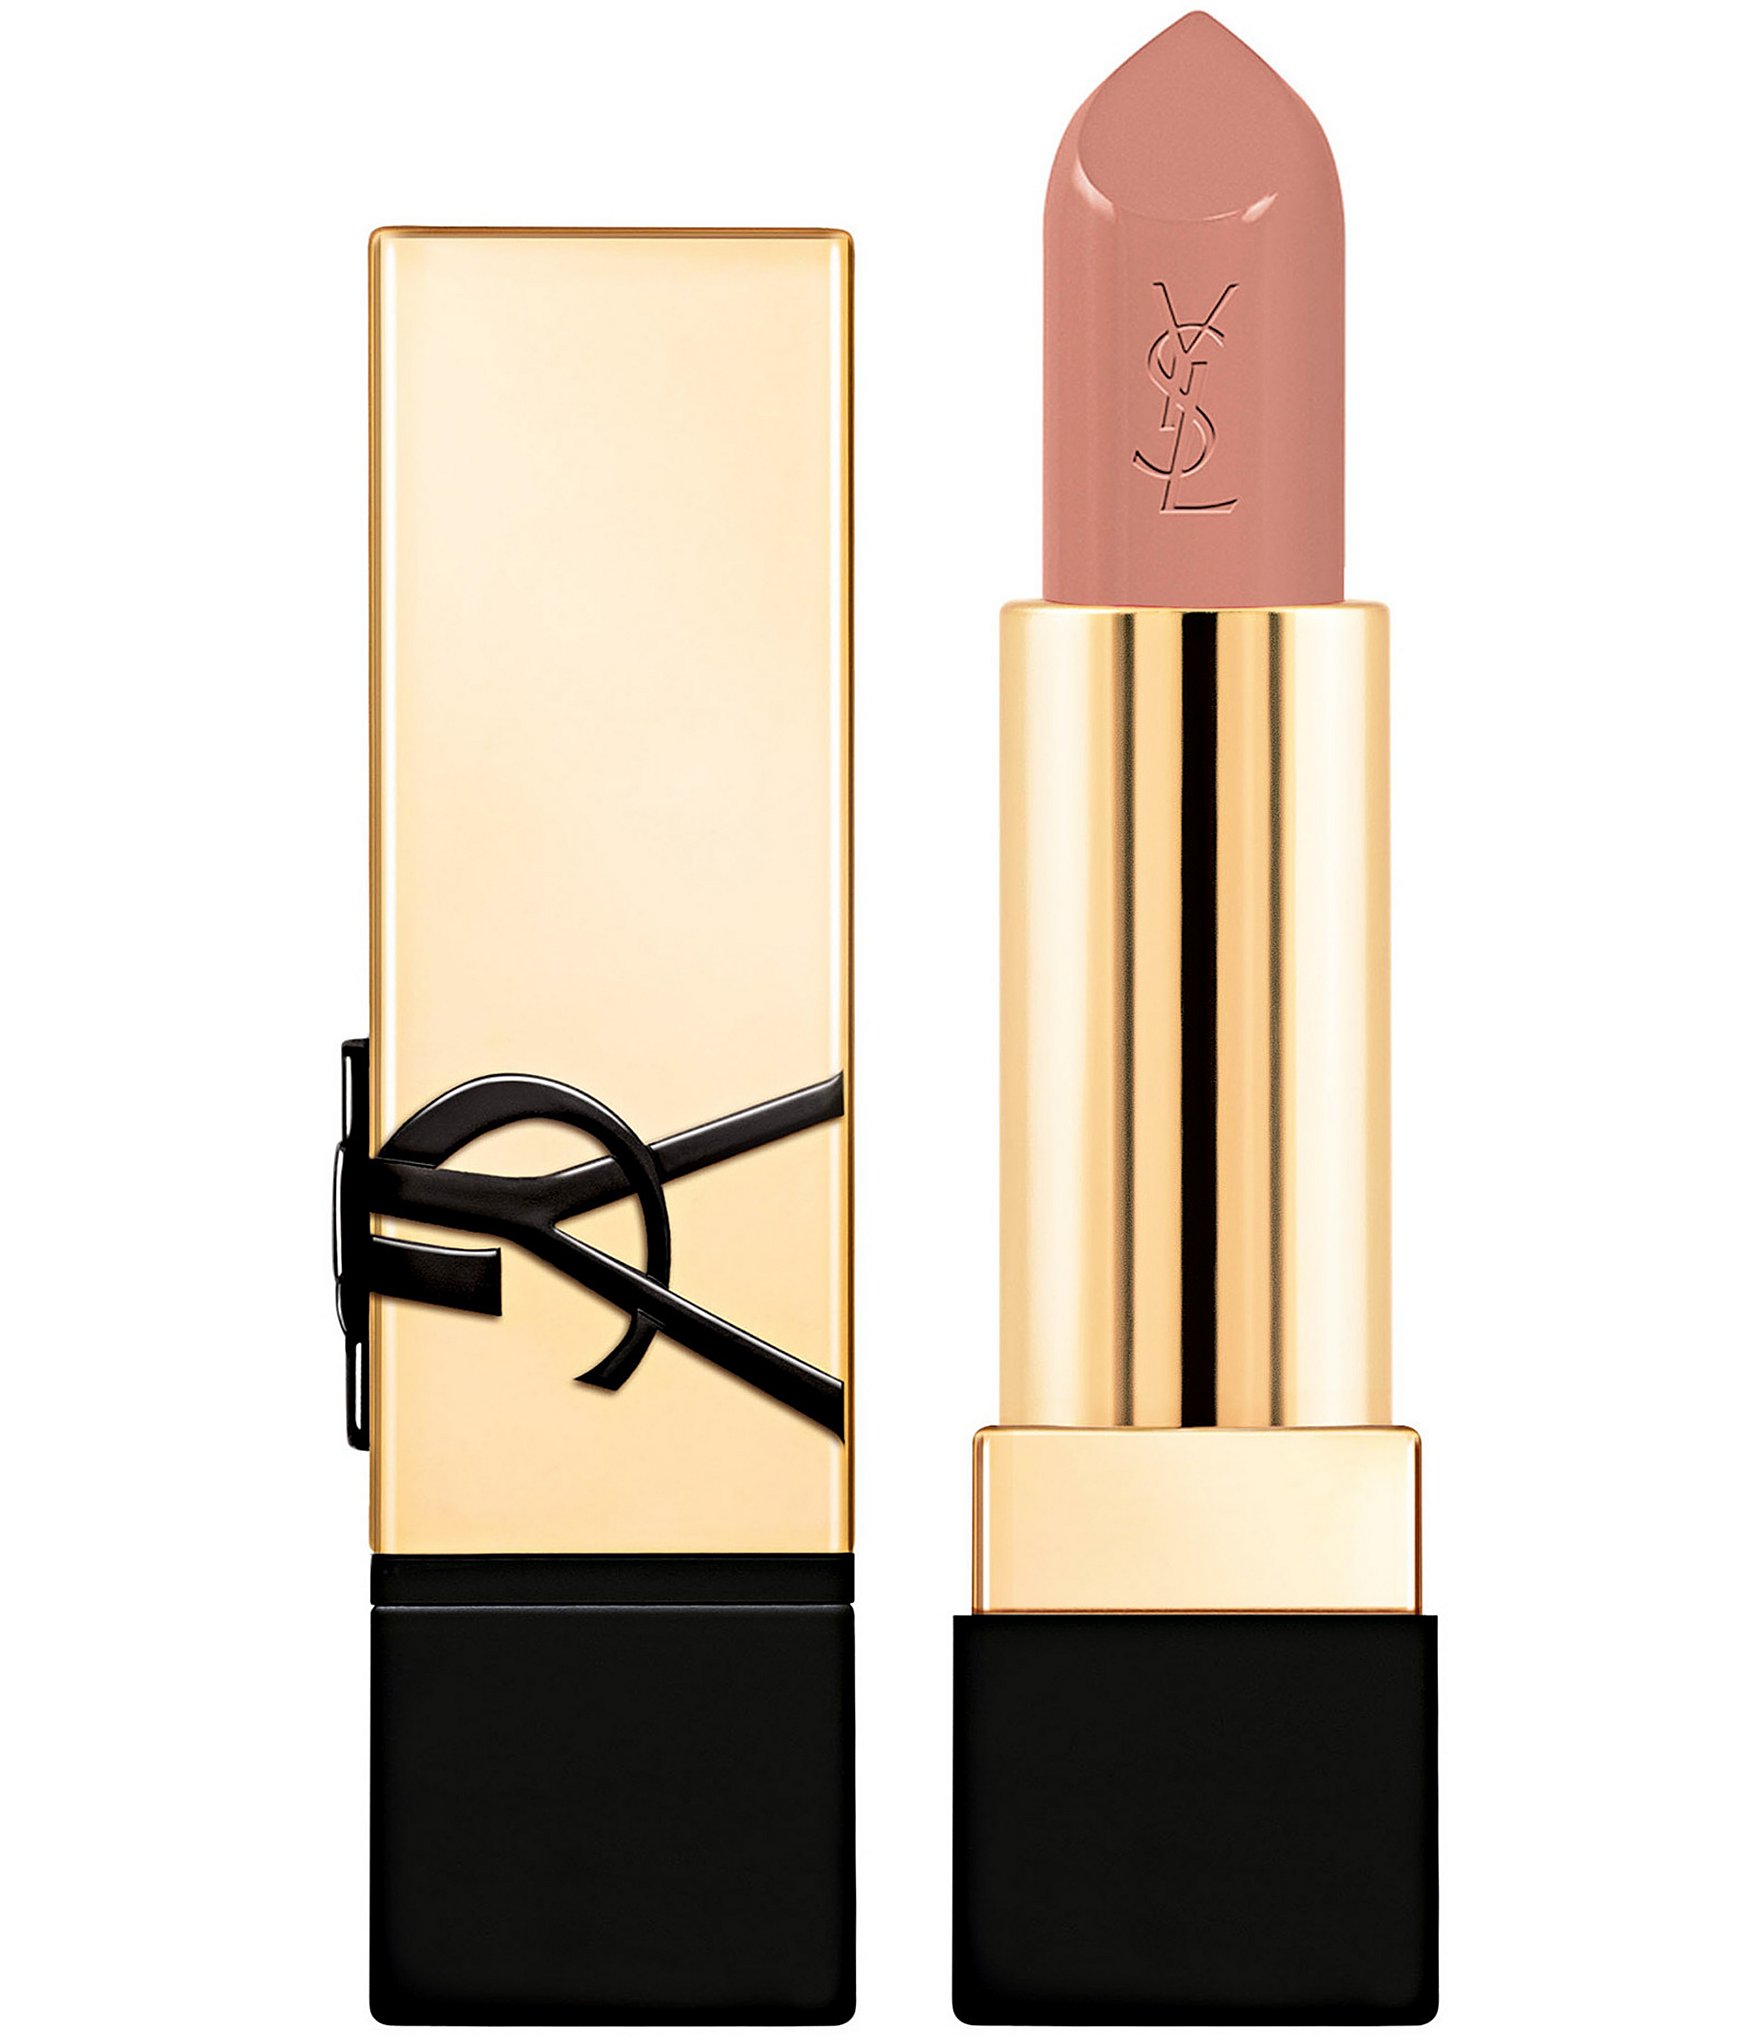 Yves Saint Laurent Beaute YSL tan beige Makeup cosmetic Bag Pouch